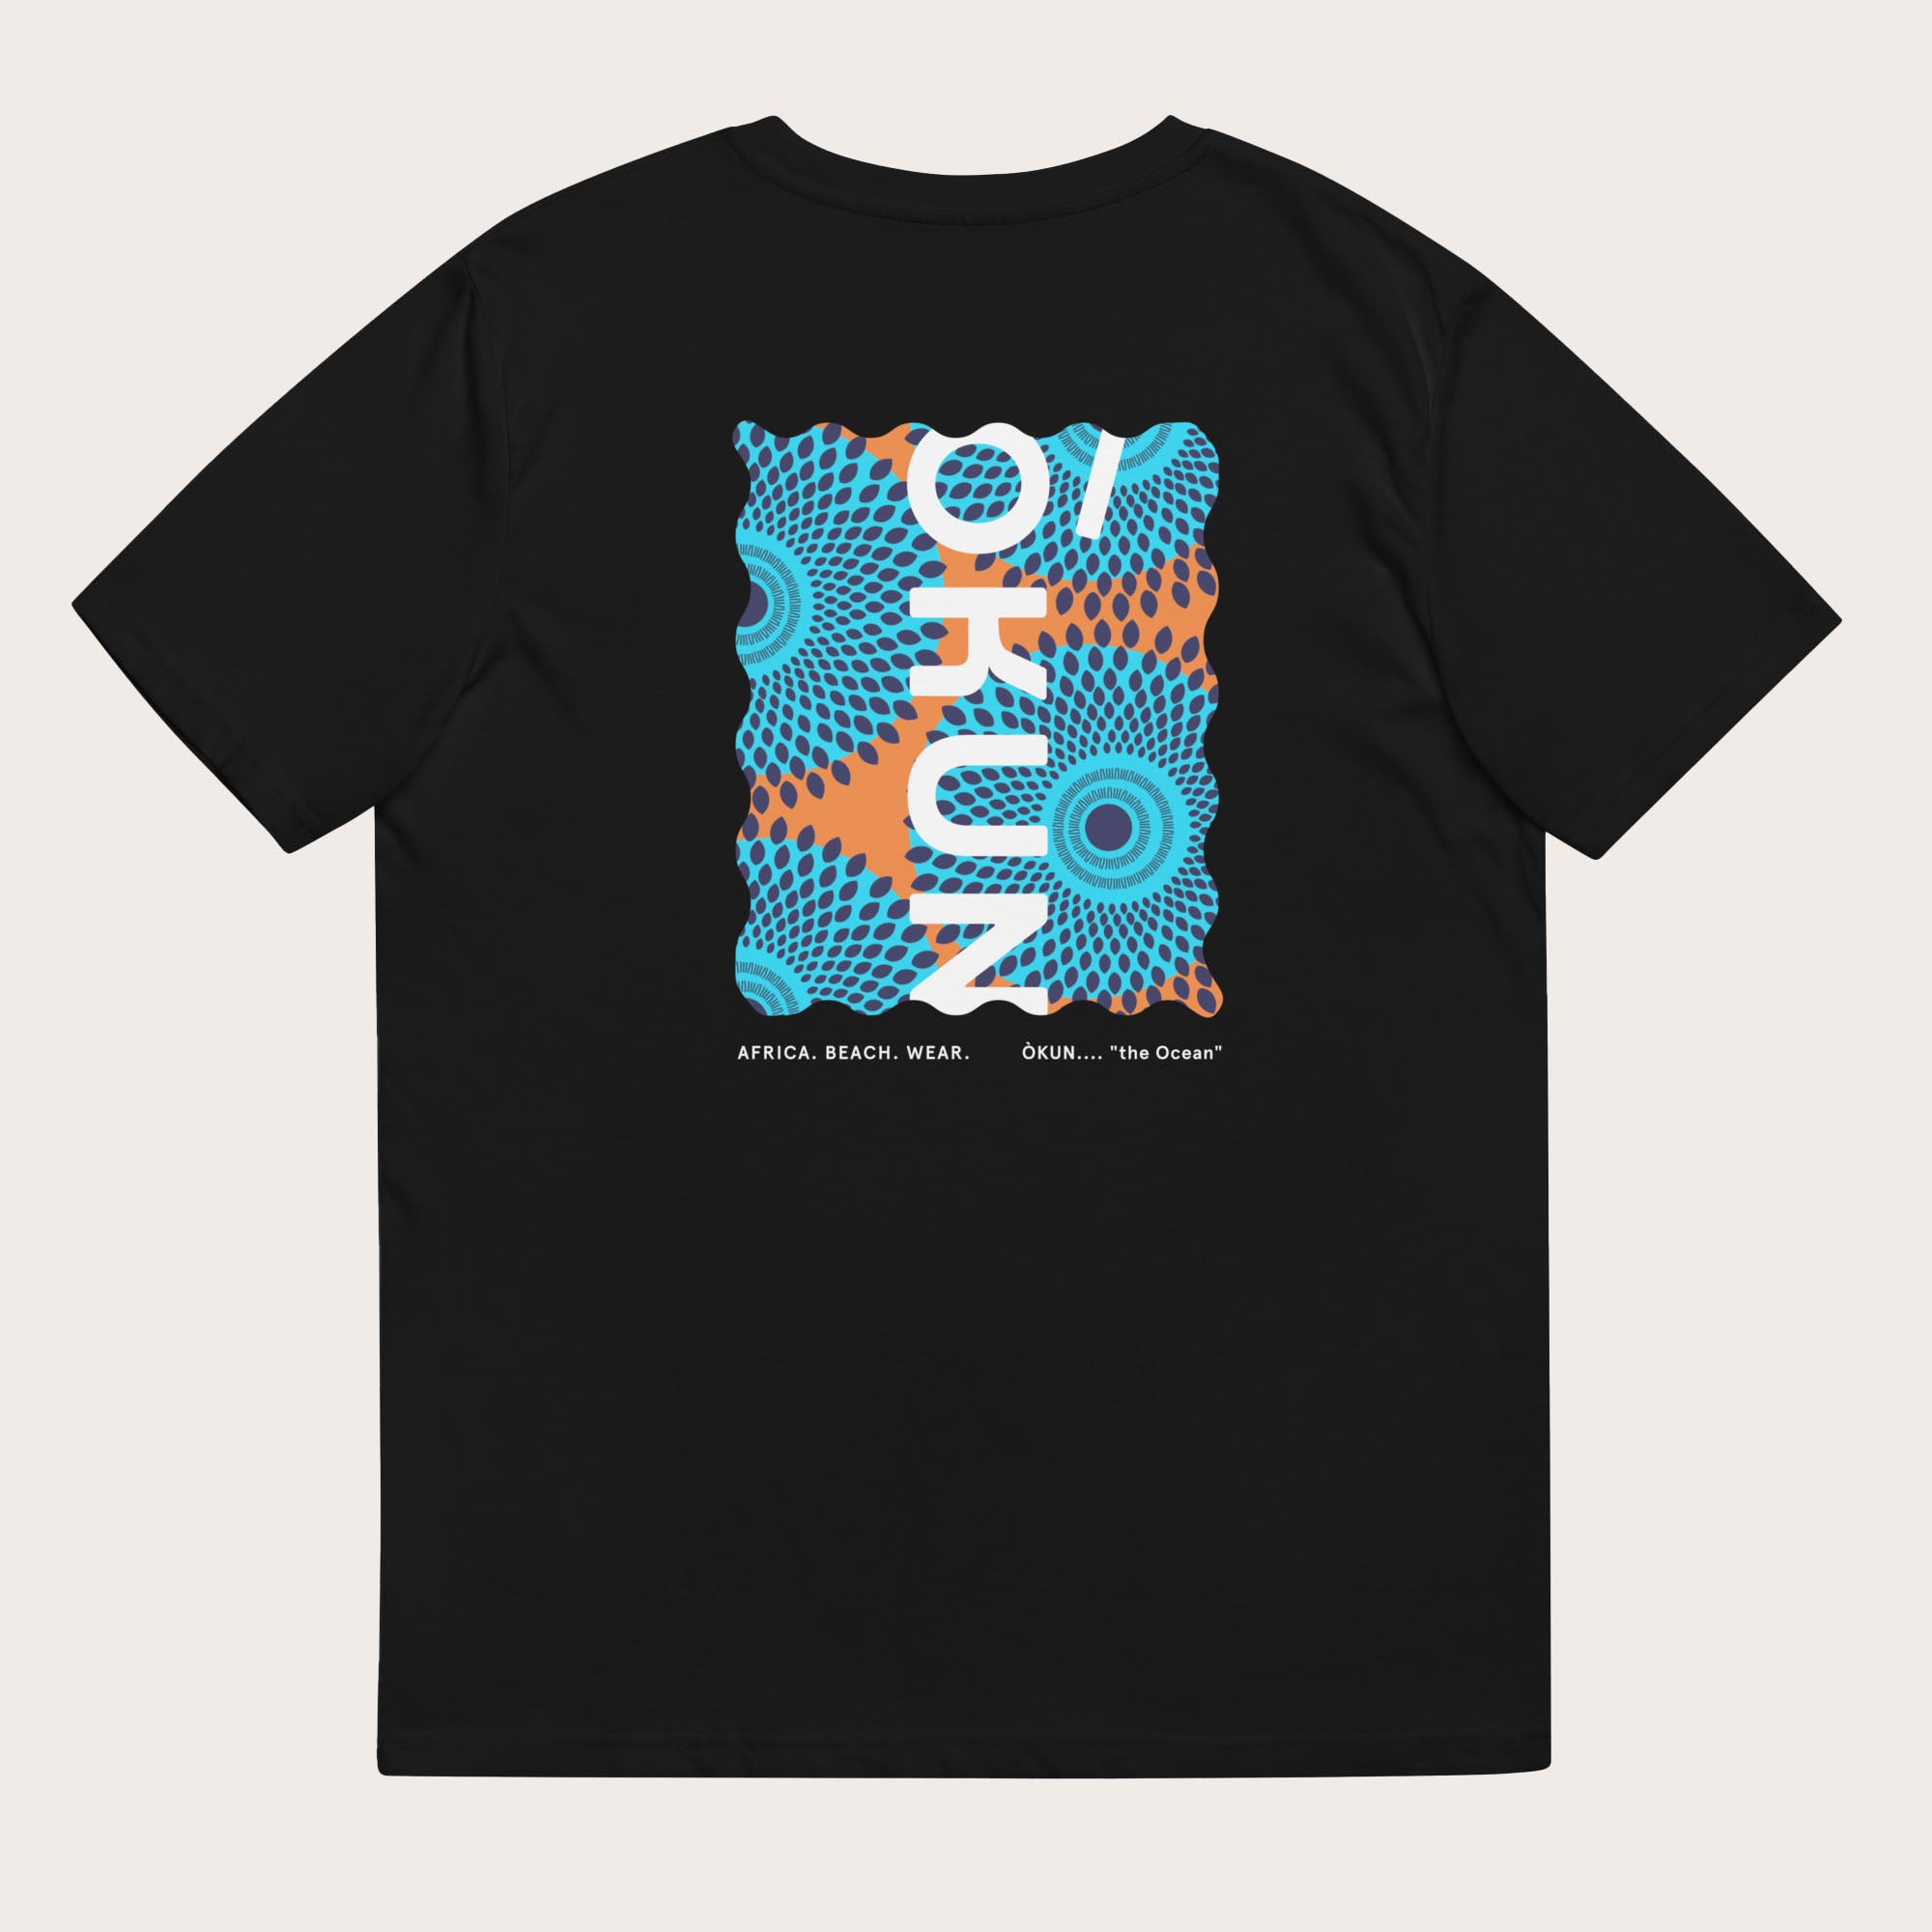 Designer Graphic T-Shirts in Black